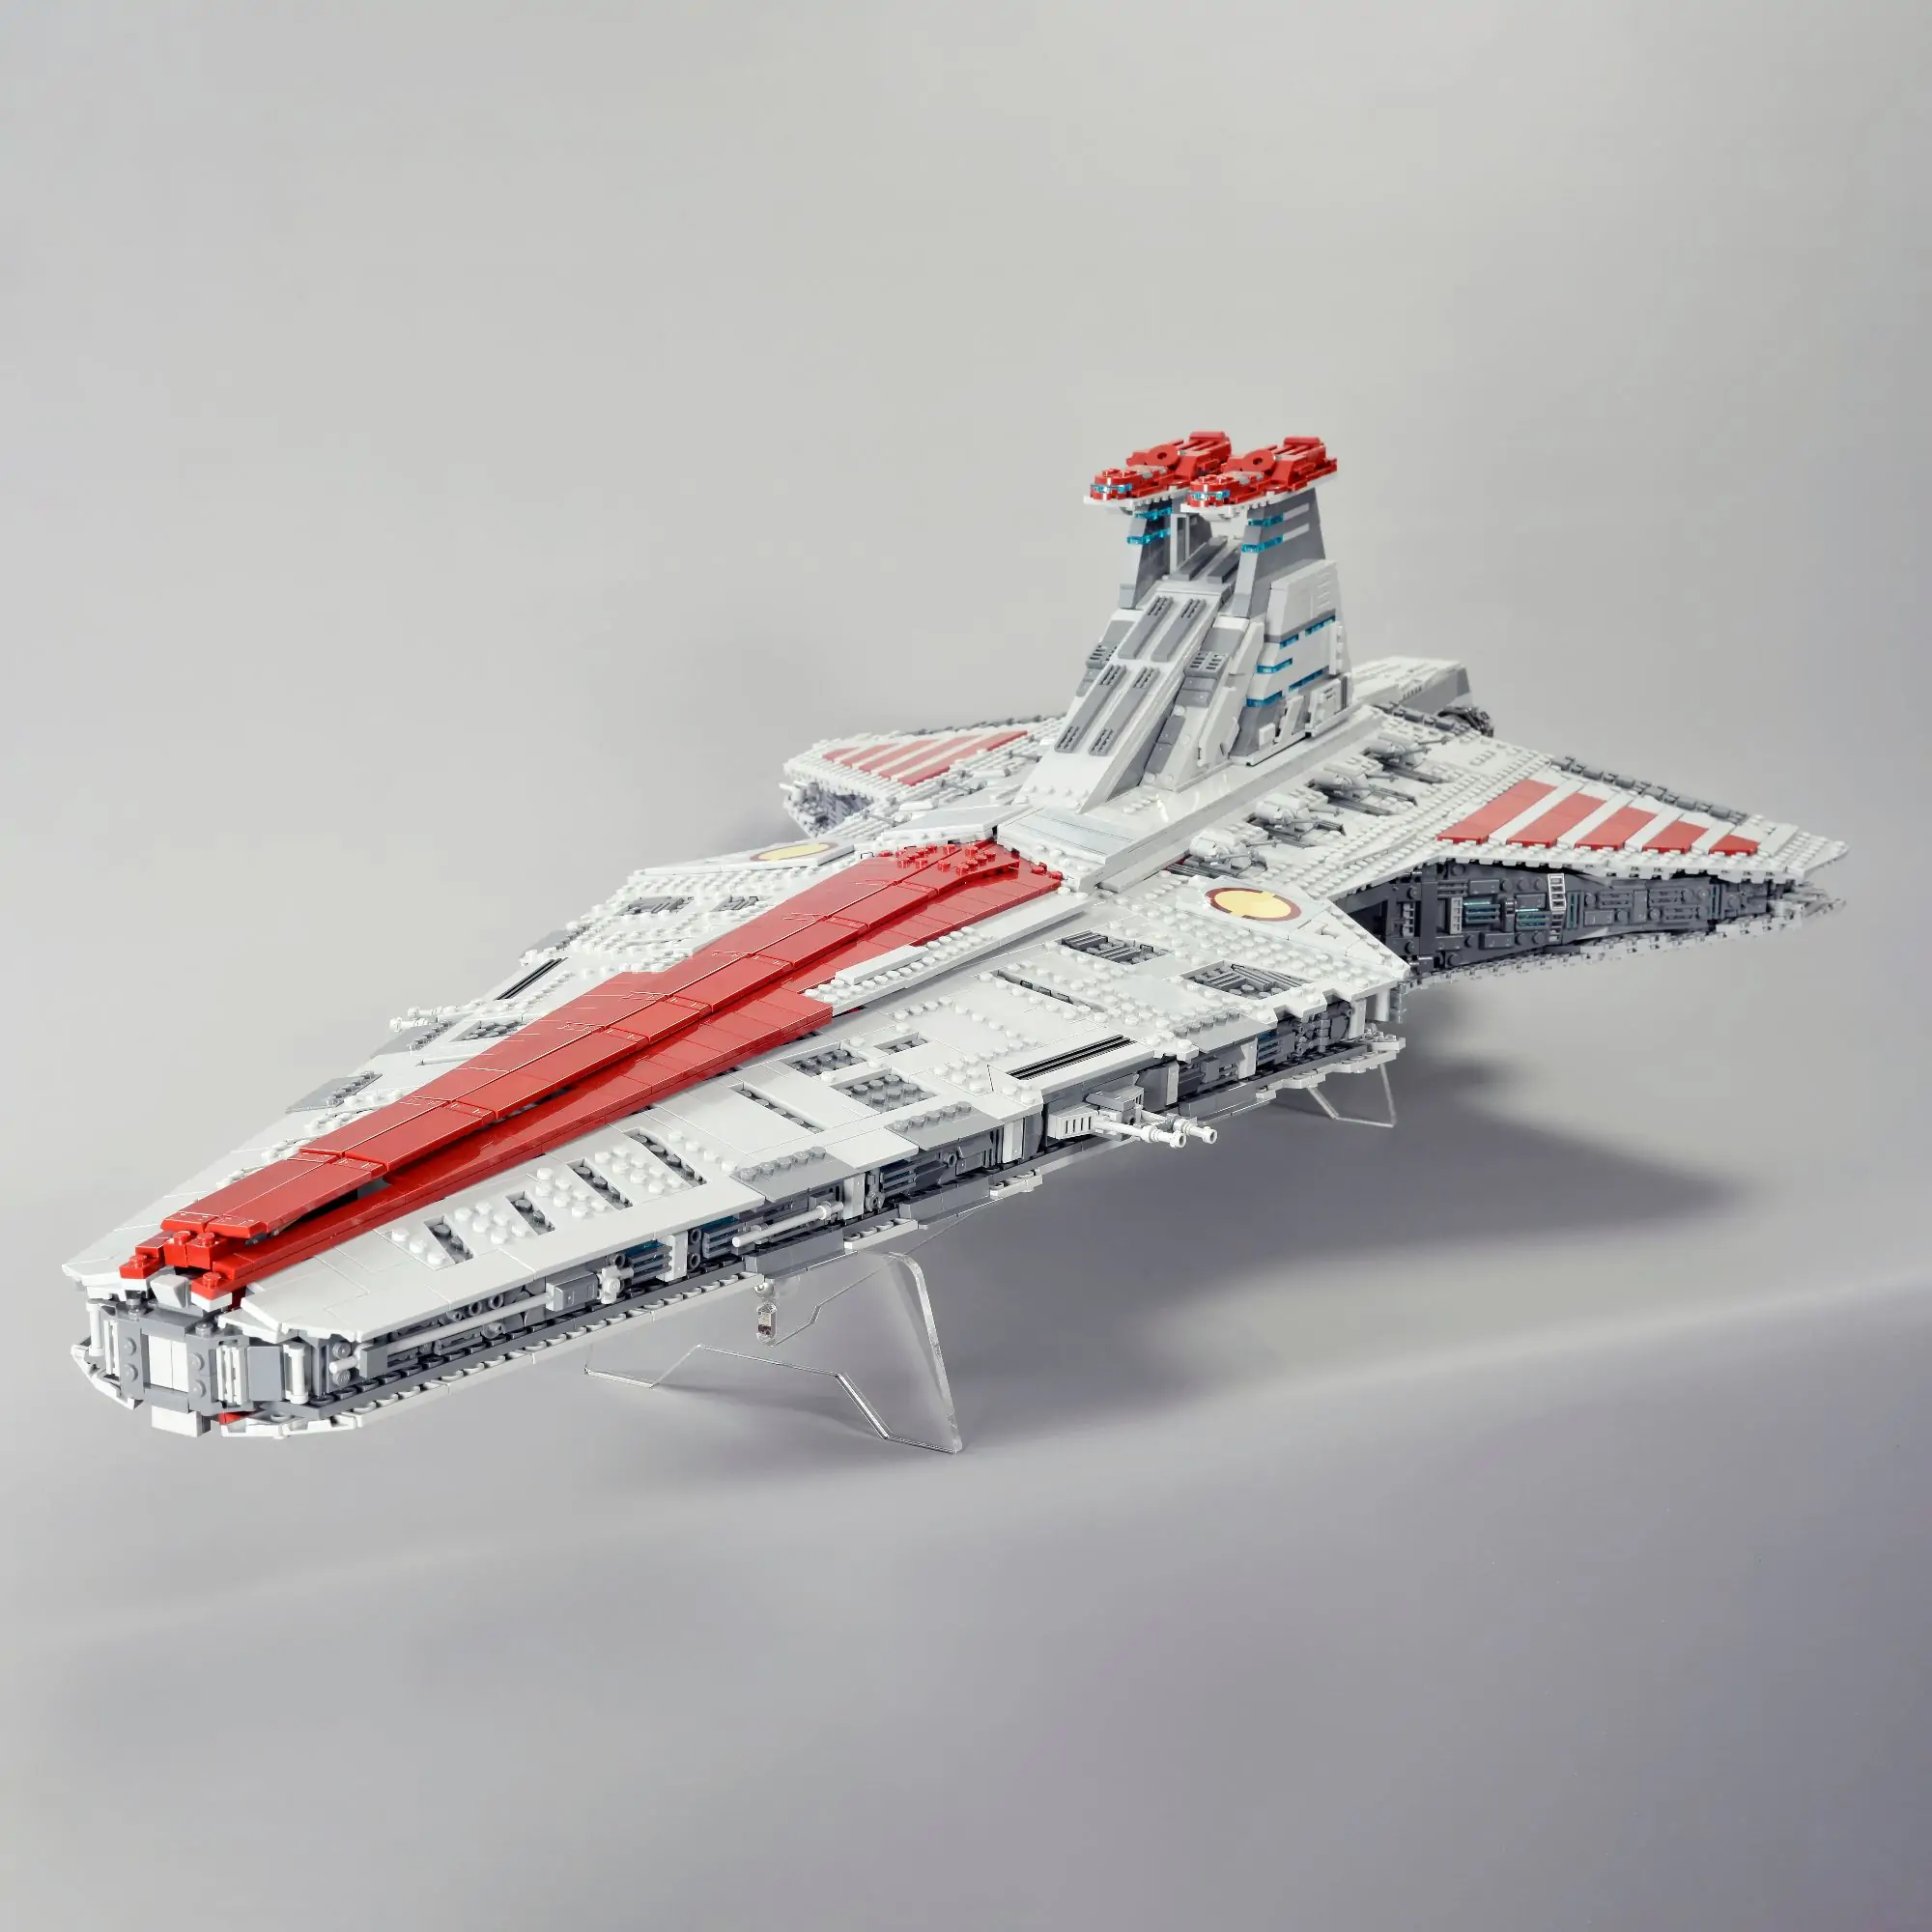 Flat Display Stand for LEGO 75367 Venator-Class Republic Attack Cruiser